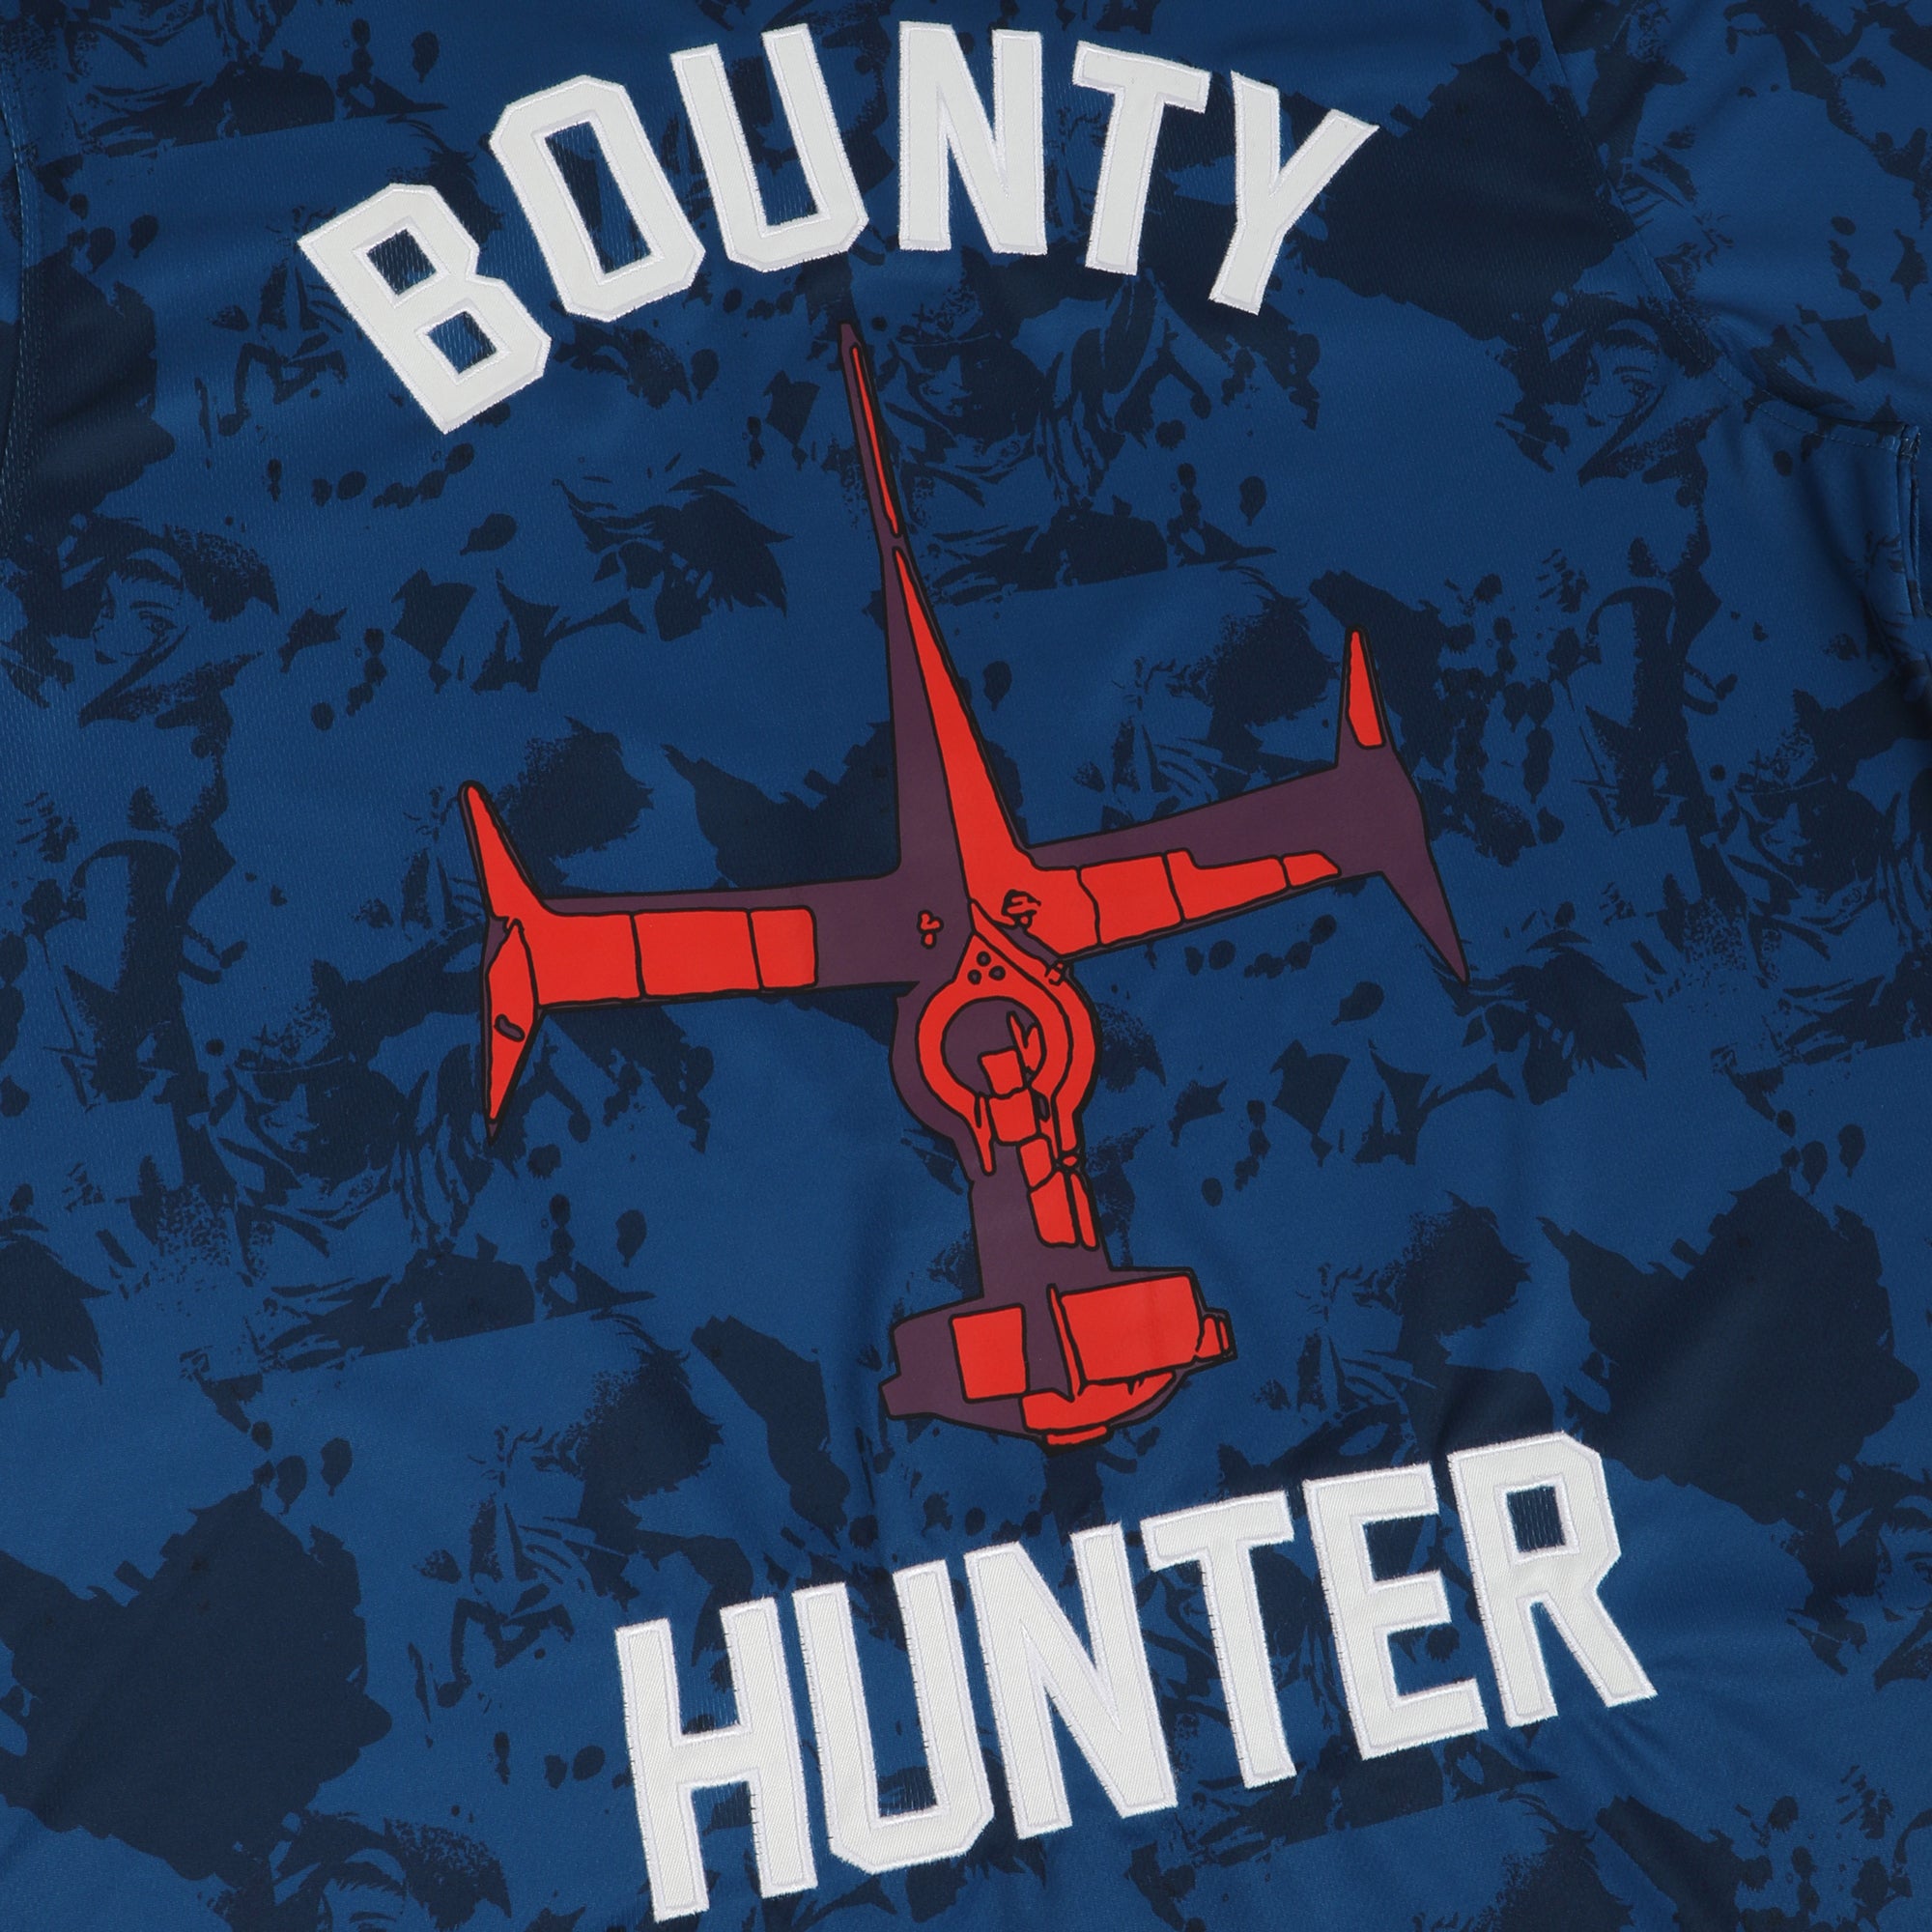 Bounty Hunter Baseball Jersey